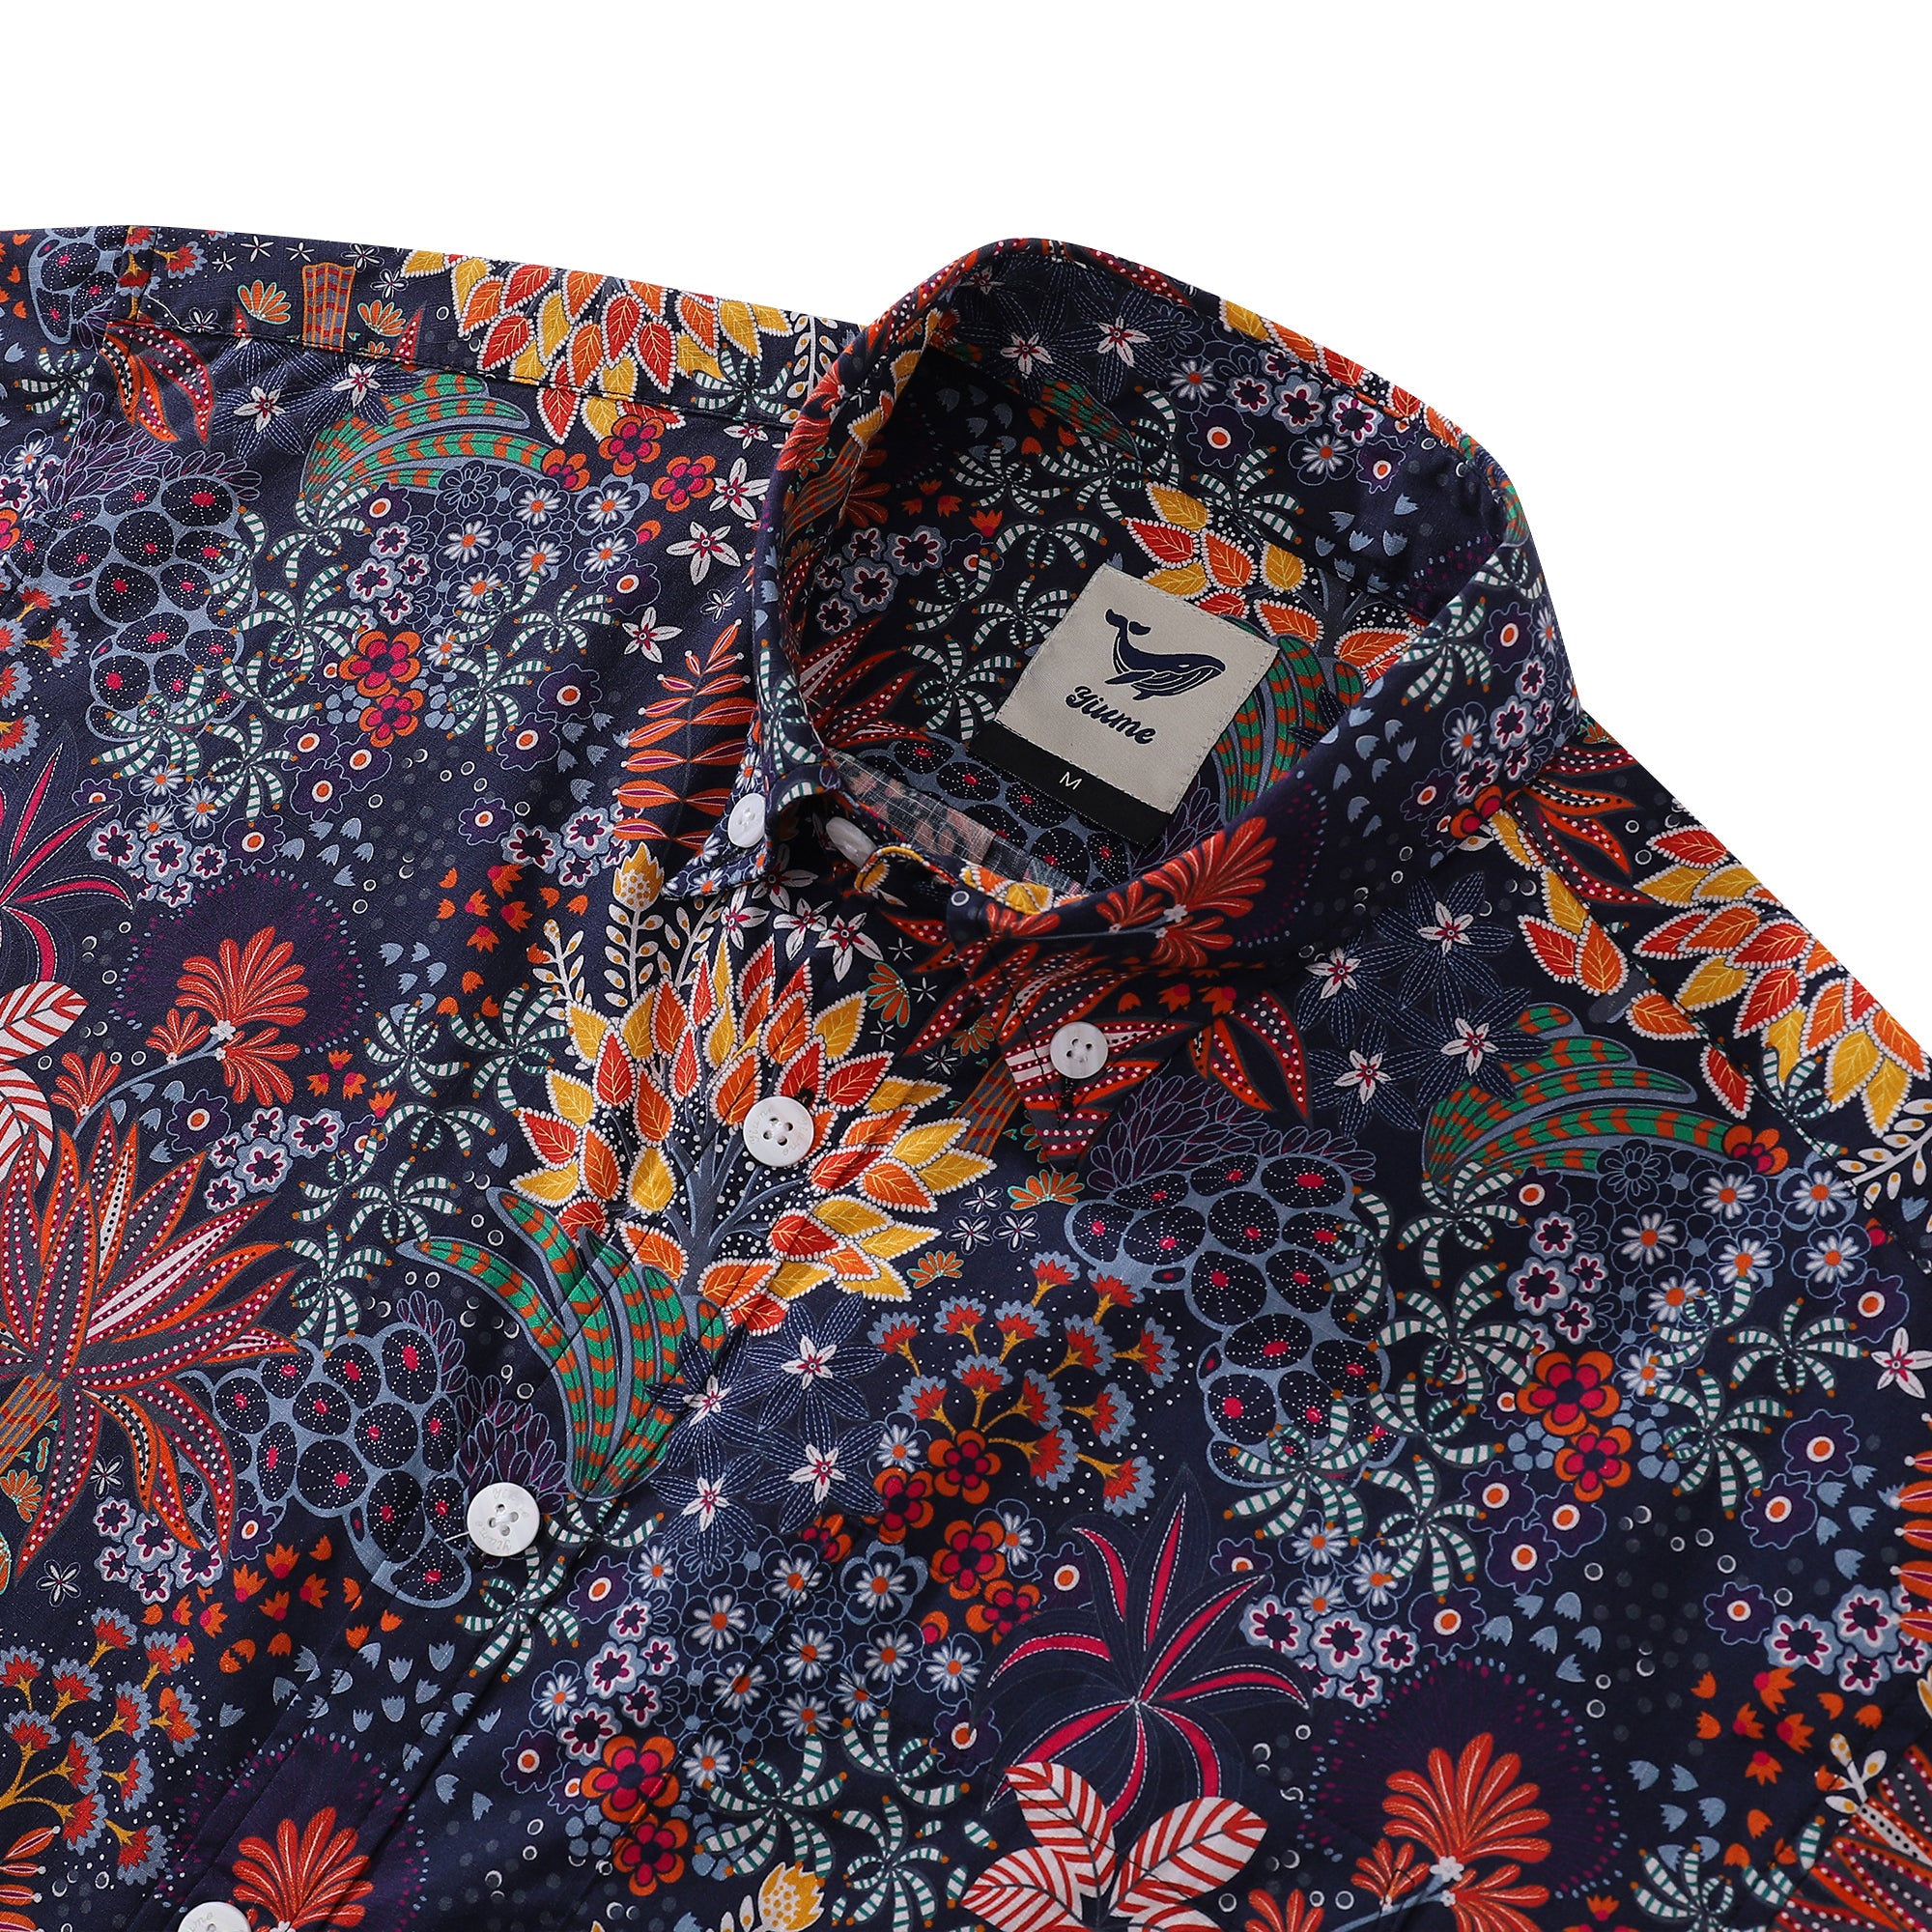 1950s Tropical Hawaiian Shirt For Men Quirky Plants Print Short Sleeve Cotton Aloha Shirt